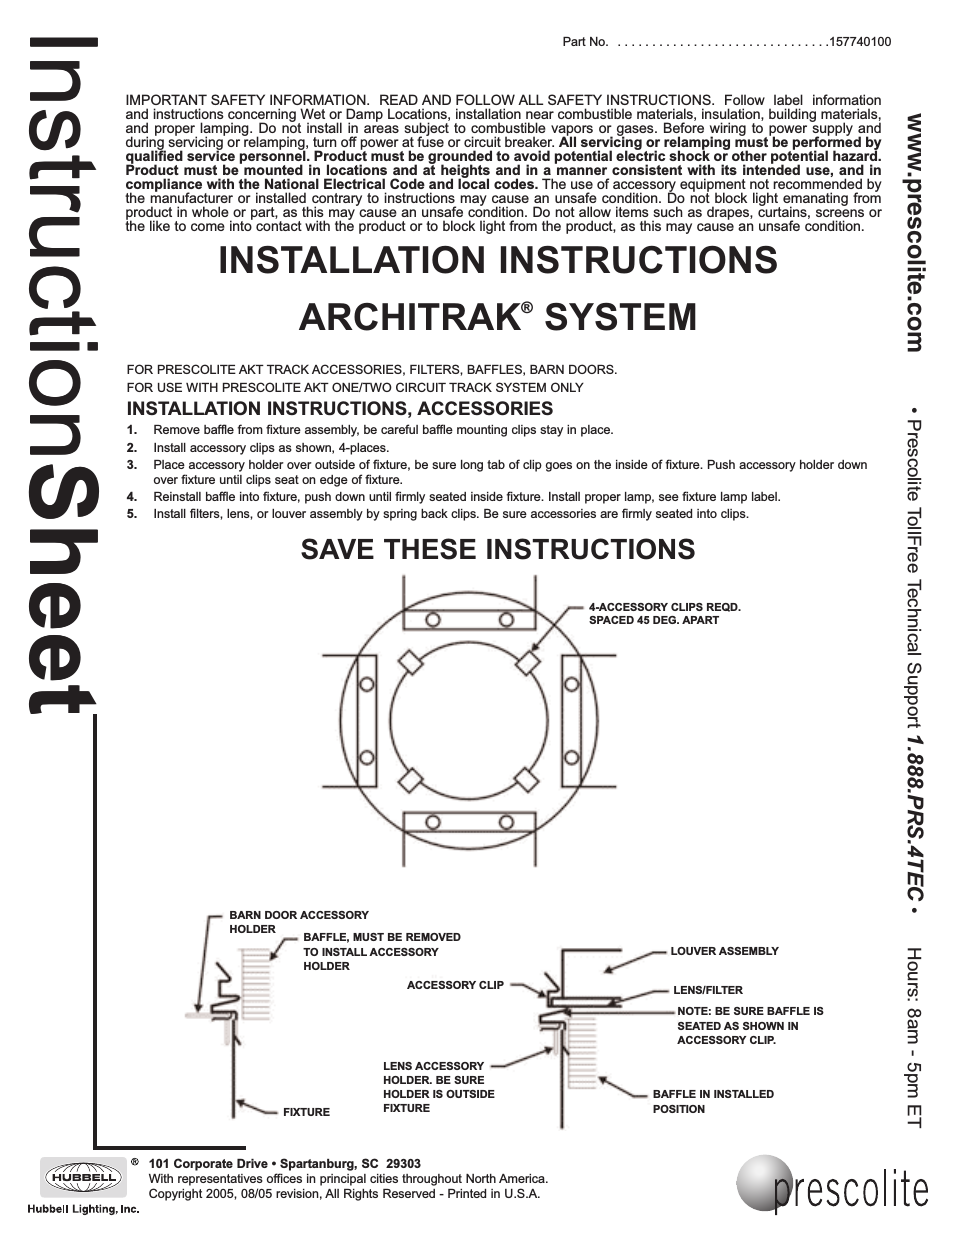 ARCHITRAK SYSTEM Track Accessories, Filters, Baffles, Barn Doors